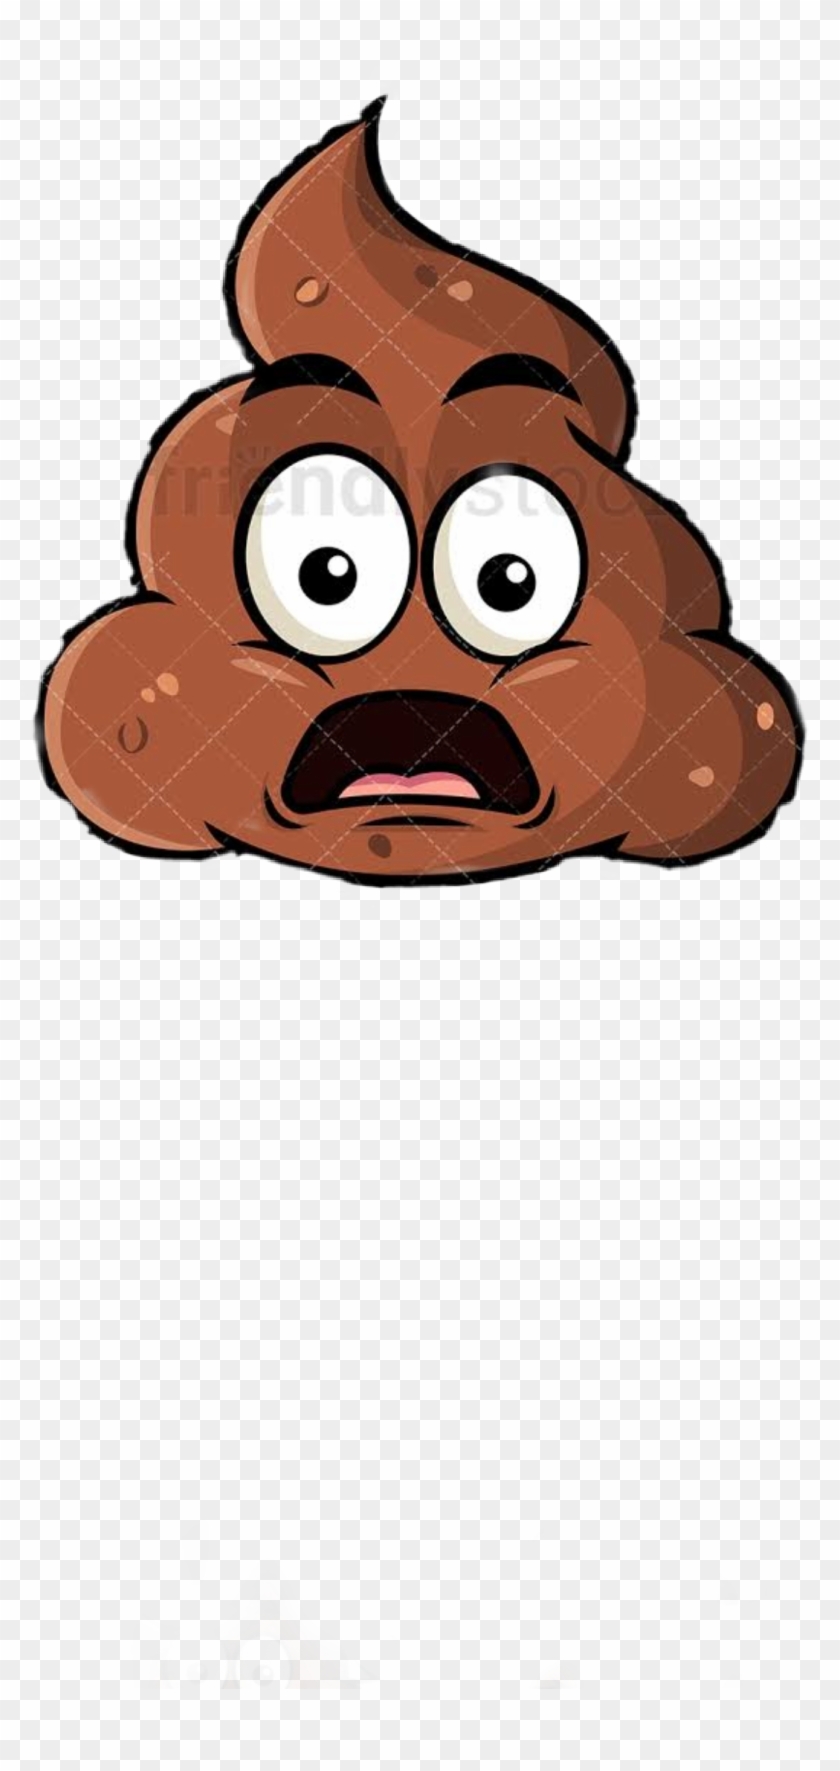 Poo Freetoedit - Pile Of Poo Emoji Clipart #4813093